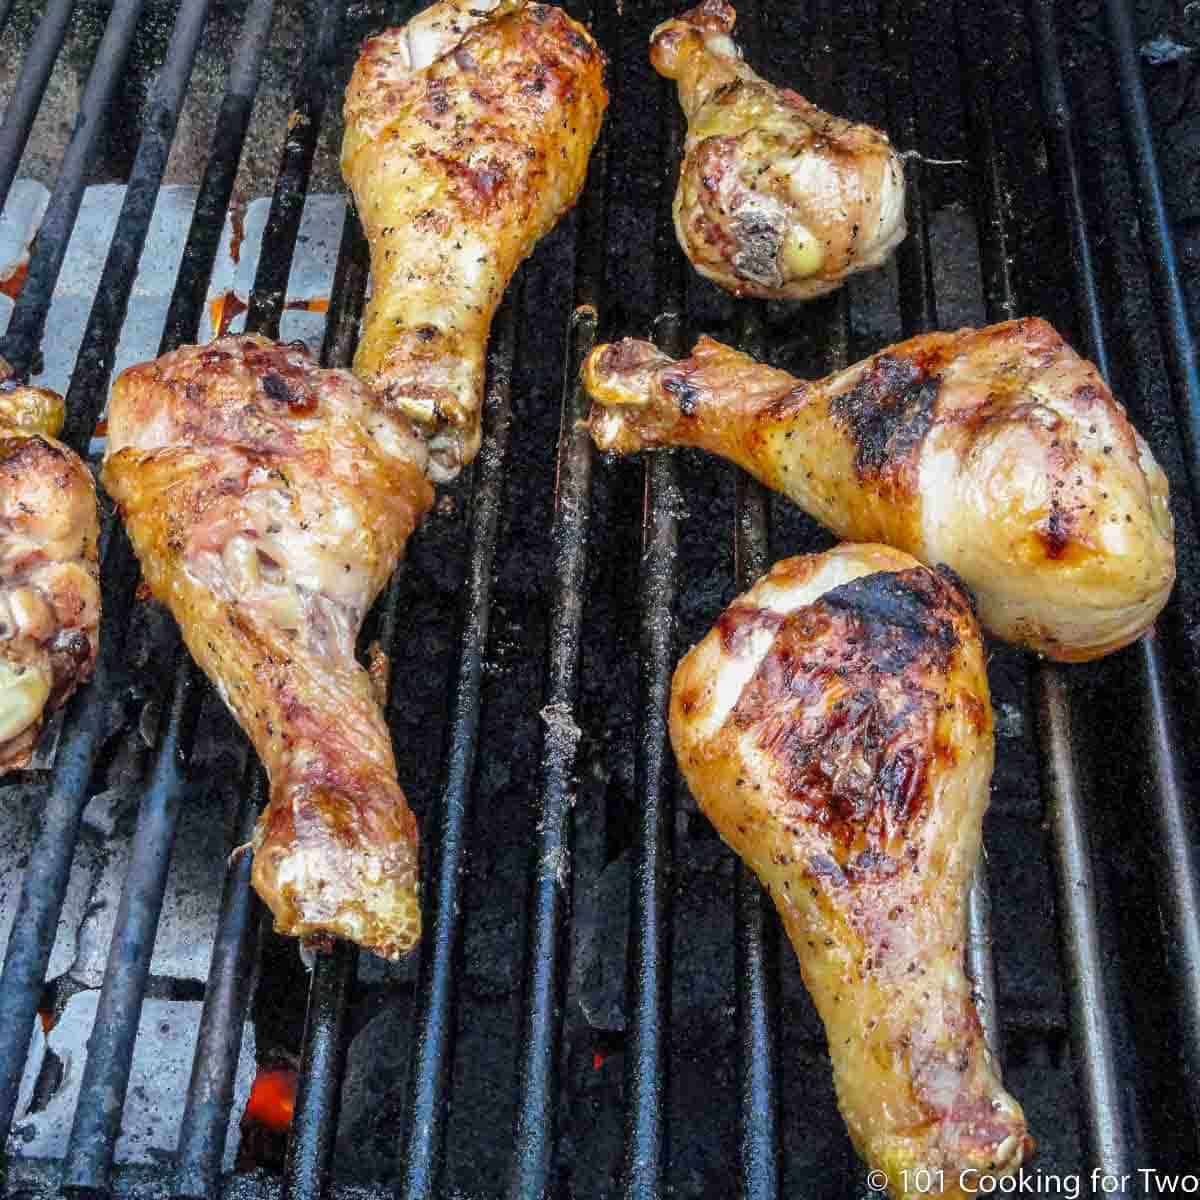 Grilled Chicken Drumsticks - The Art of 